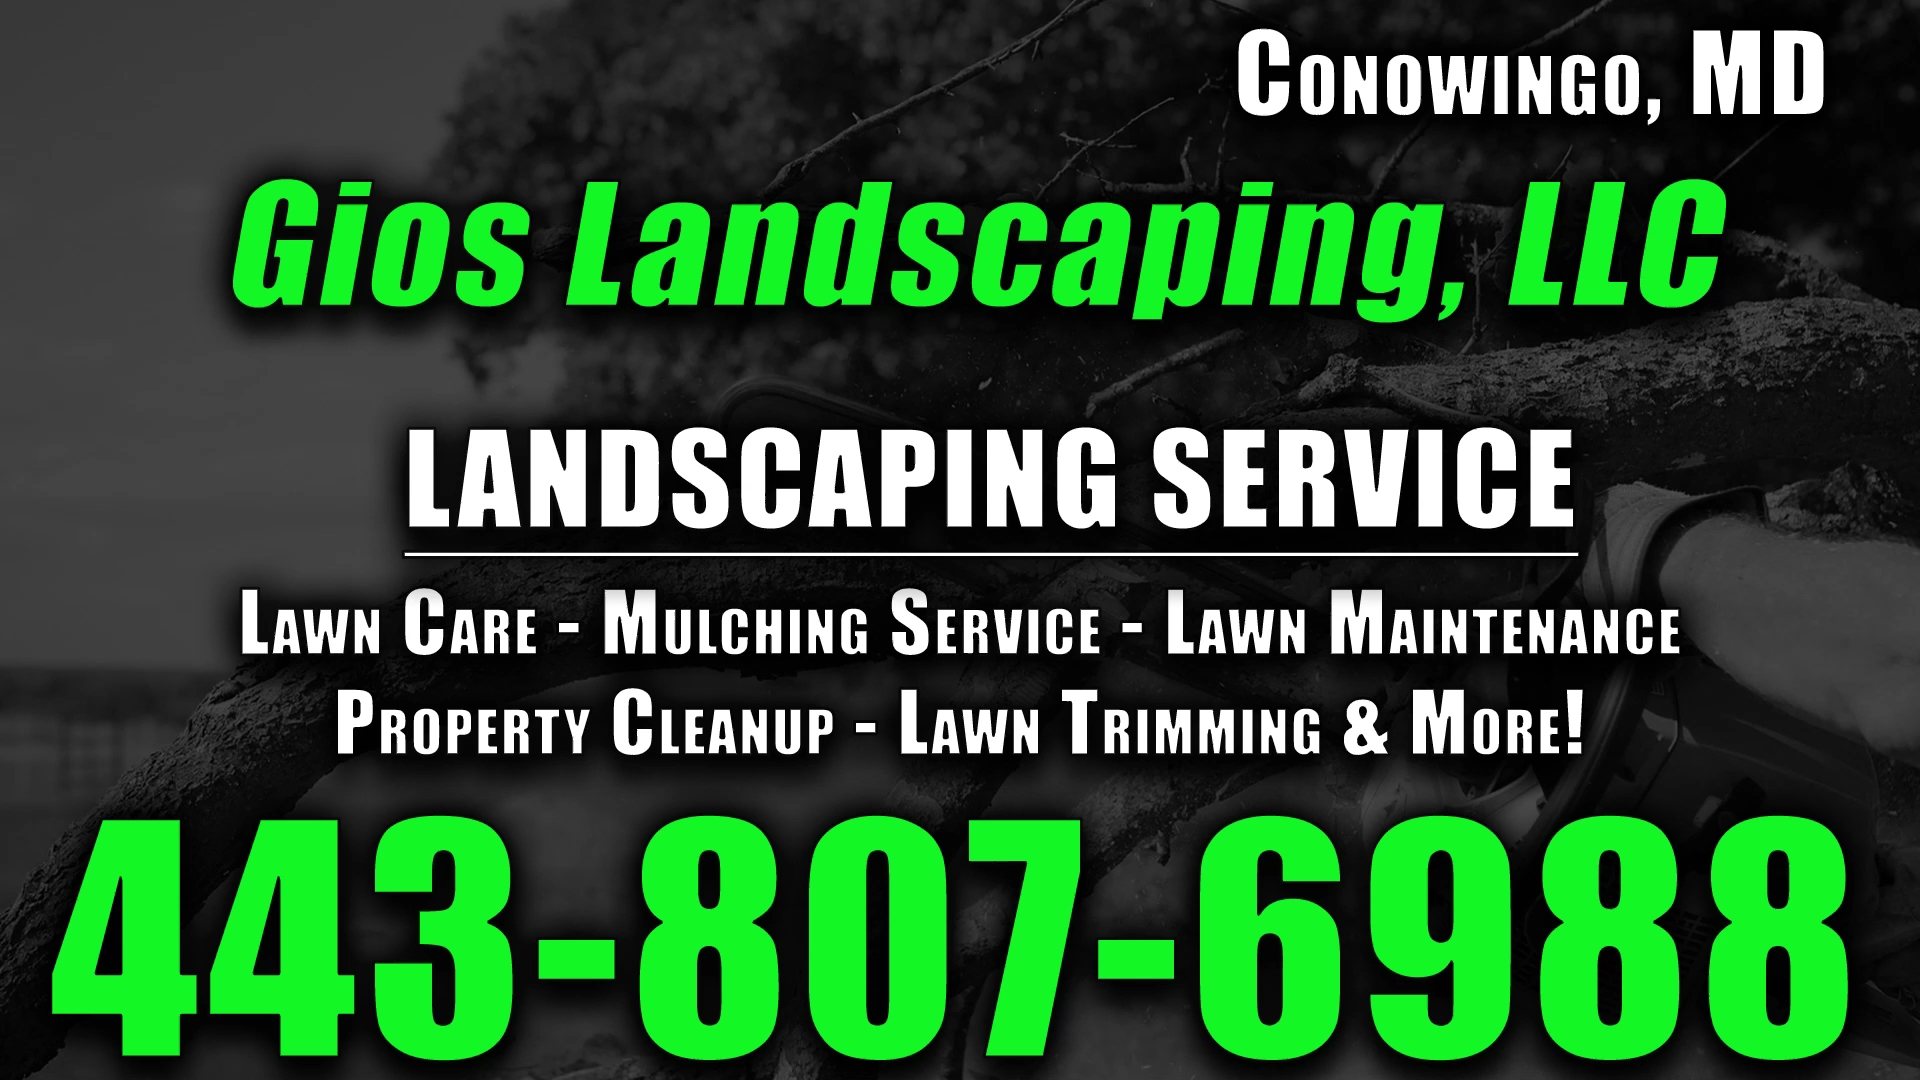 Gios Landscaping, LLC 21 Weaver Meadows Rd, Conowingo Maryland 21918